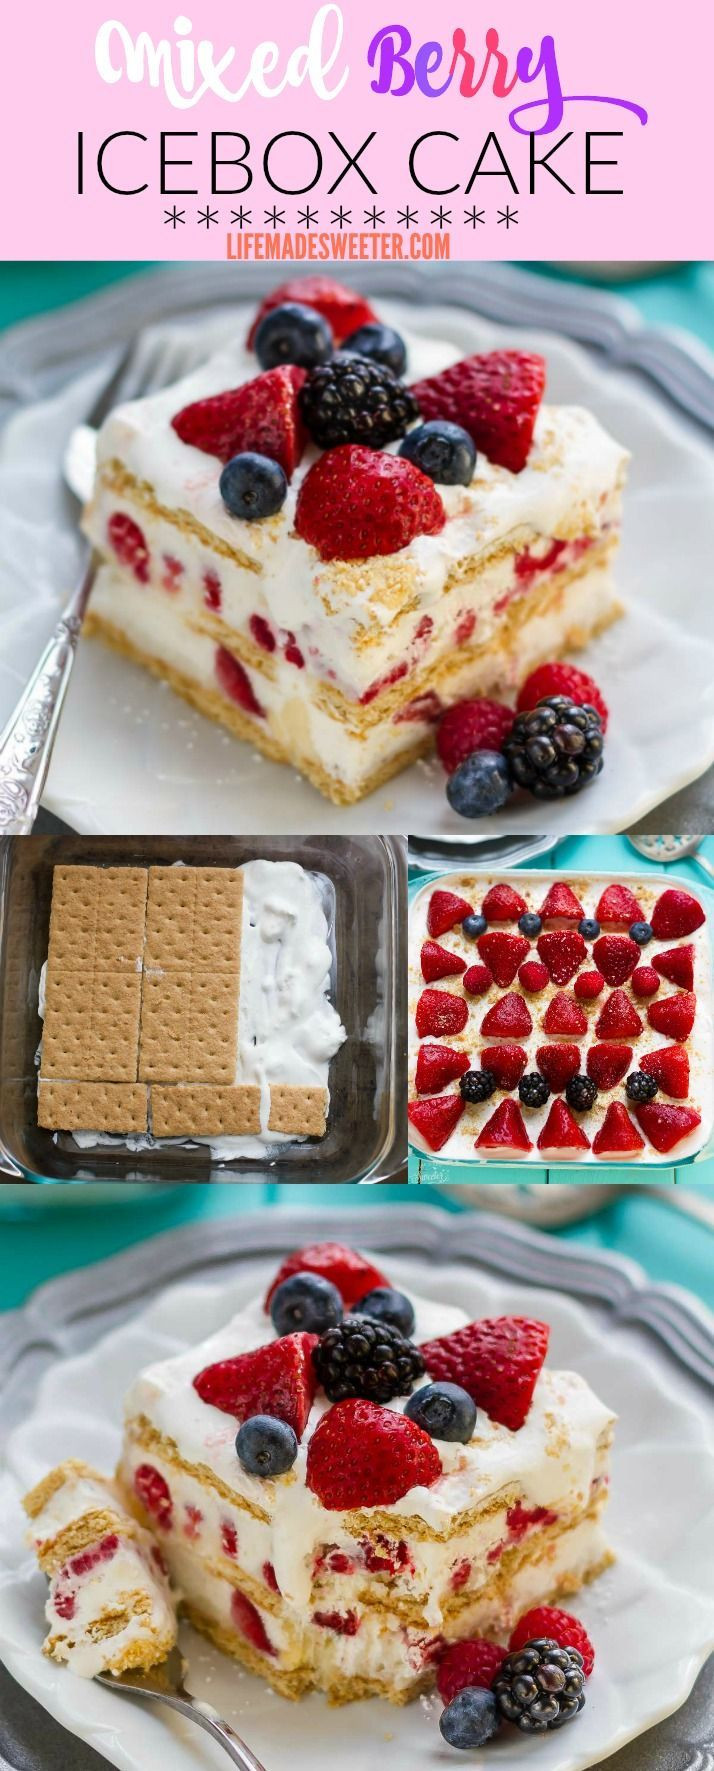 Make Ahead Summer Desserts
 180 best Summertime images on Pinterest